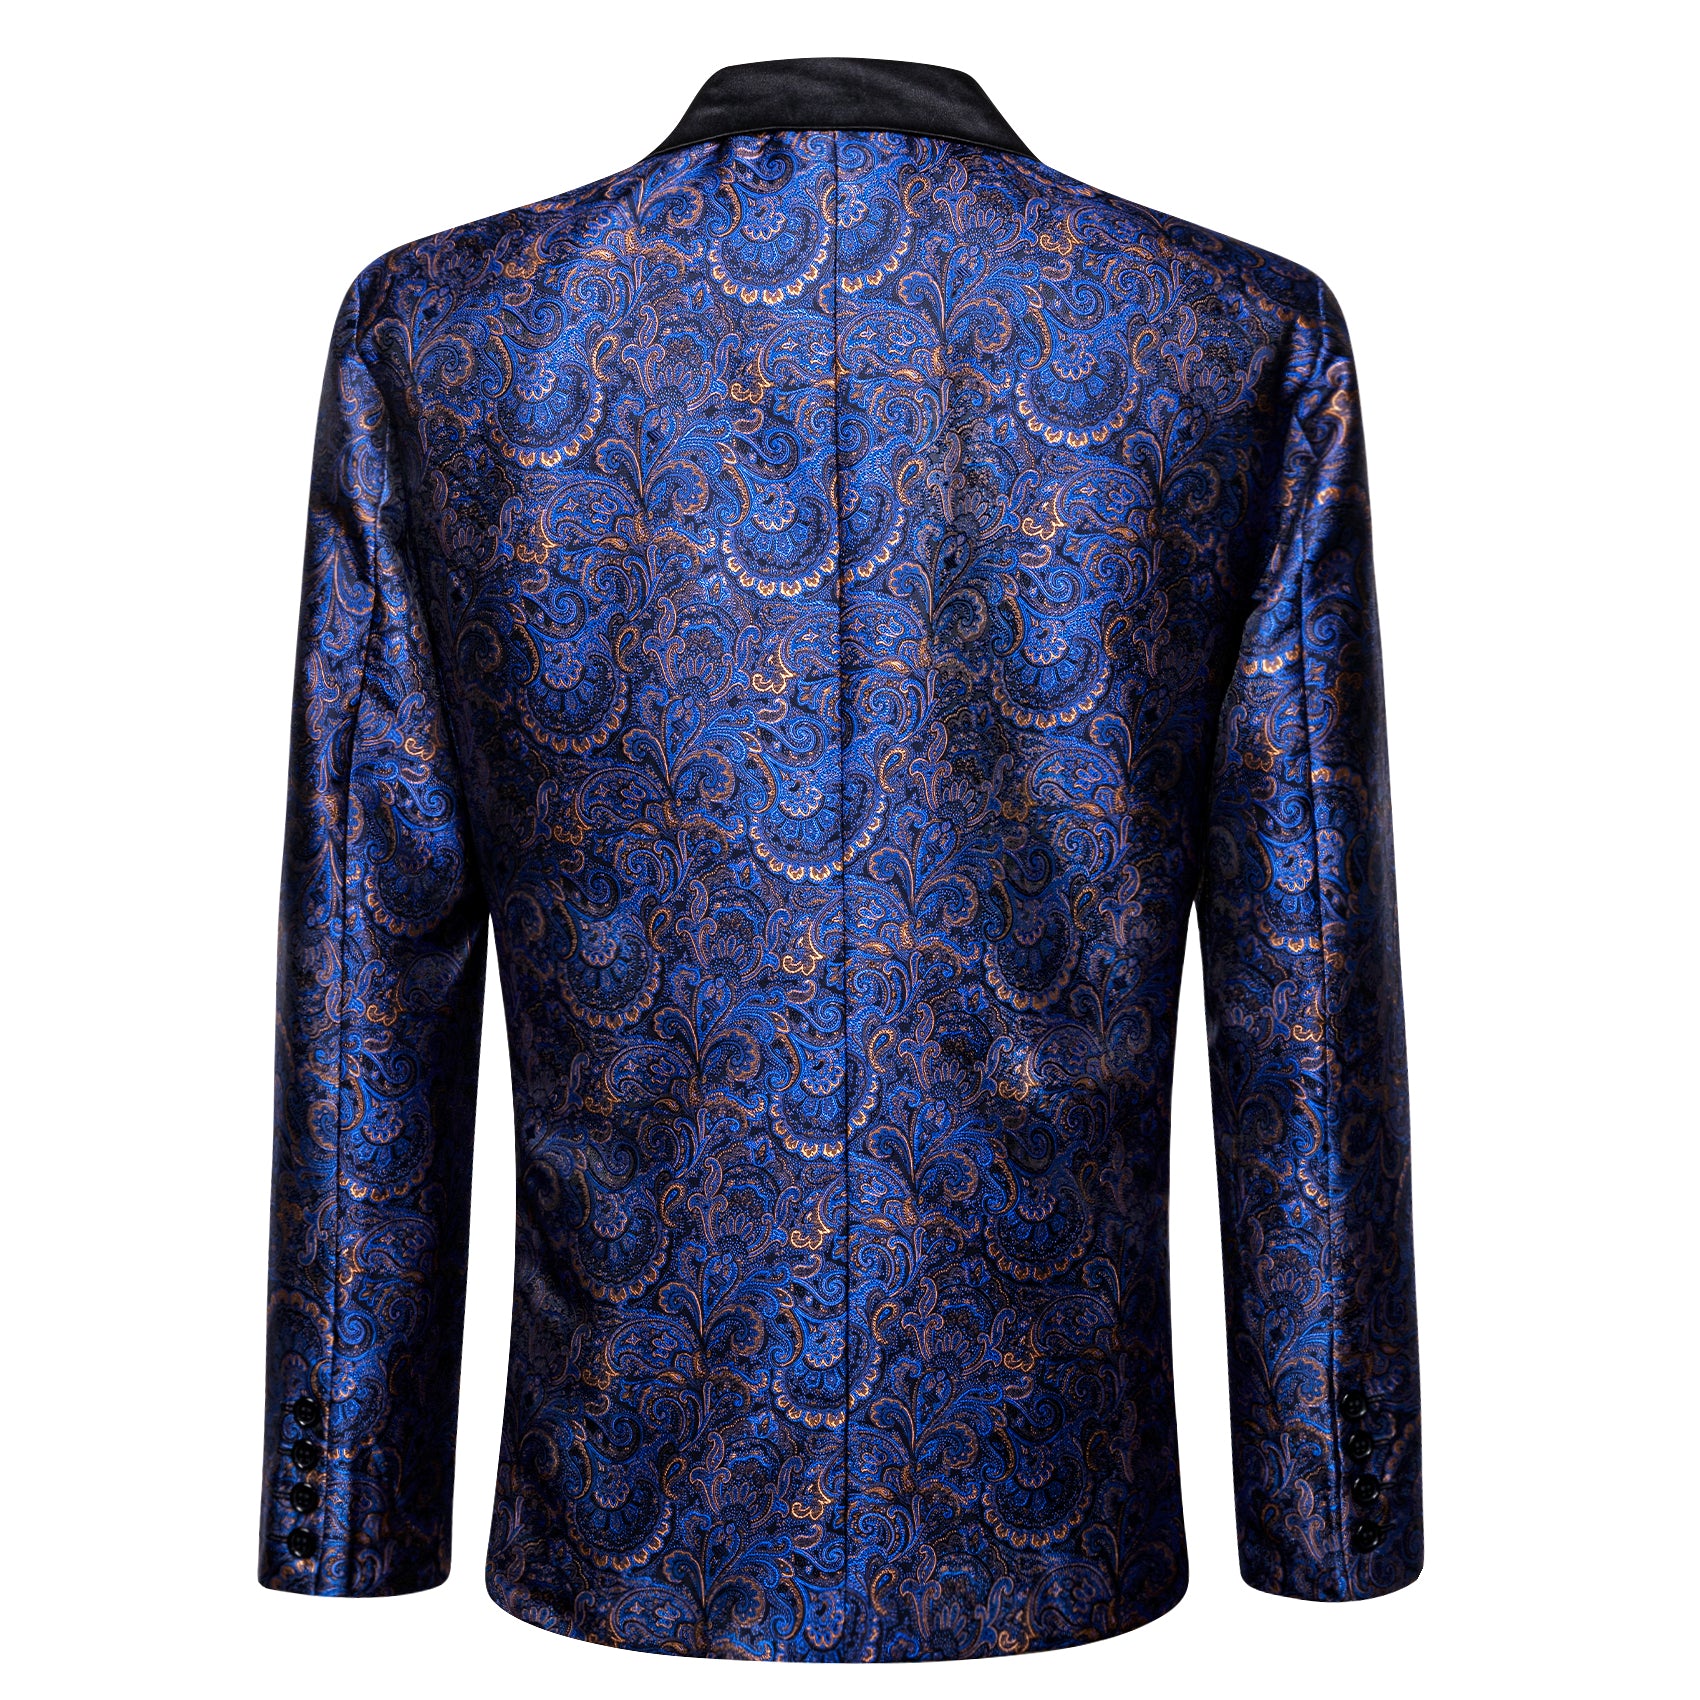 Men's Dress Blue Paisley Suit Jacket Slim One Button Stylish Blazer